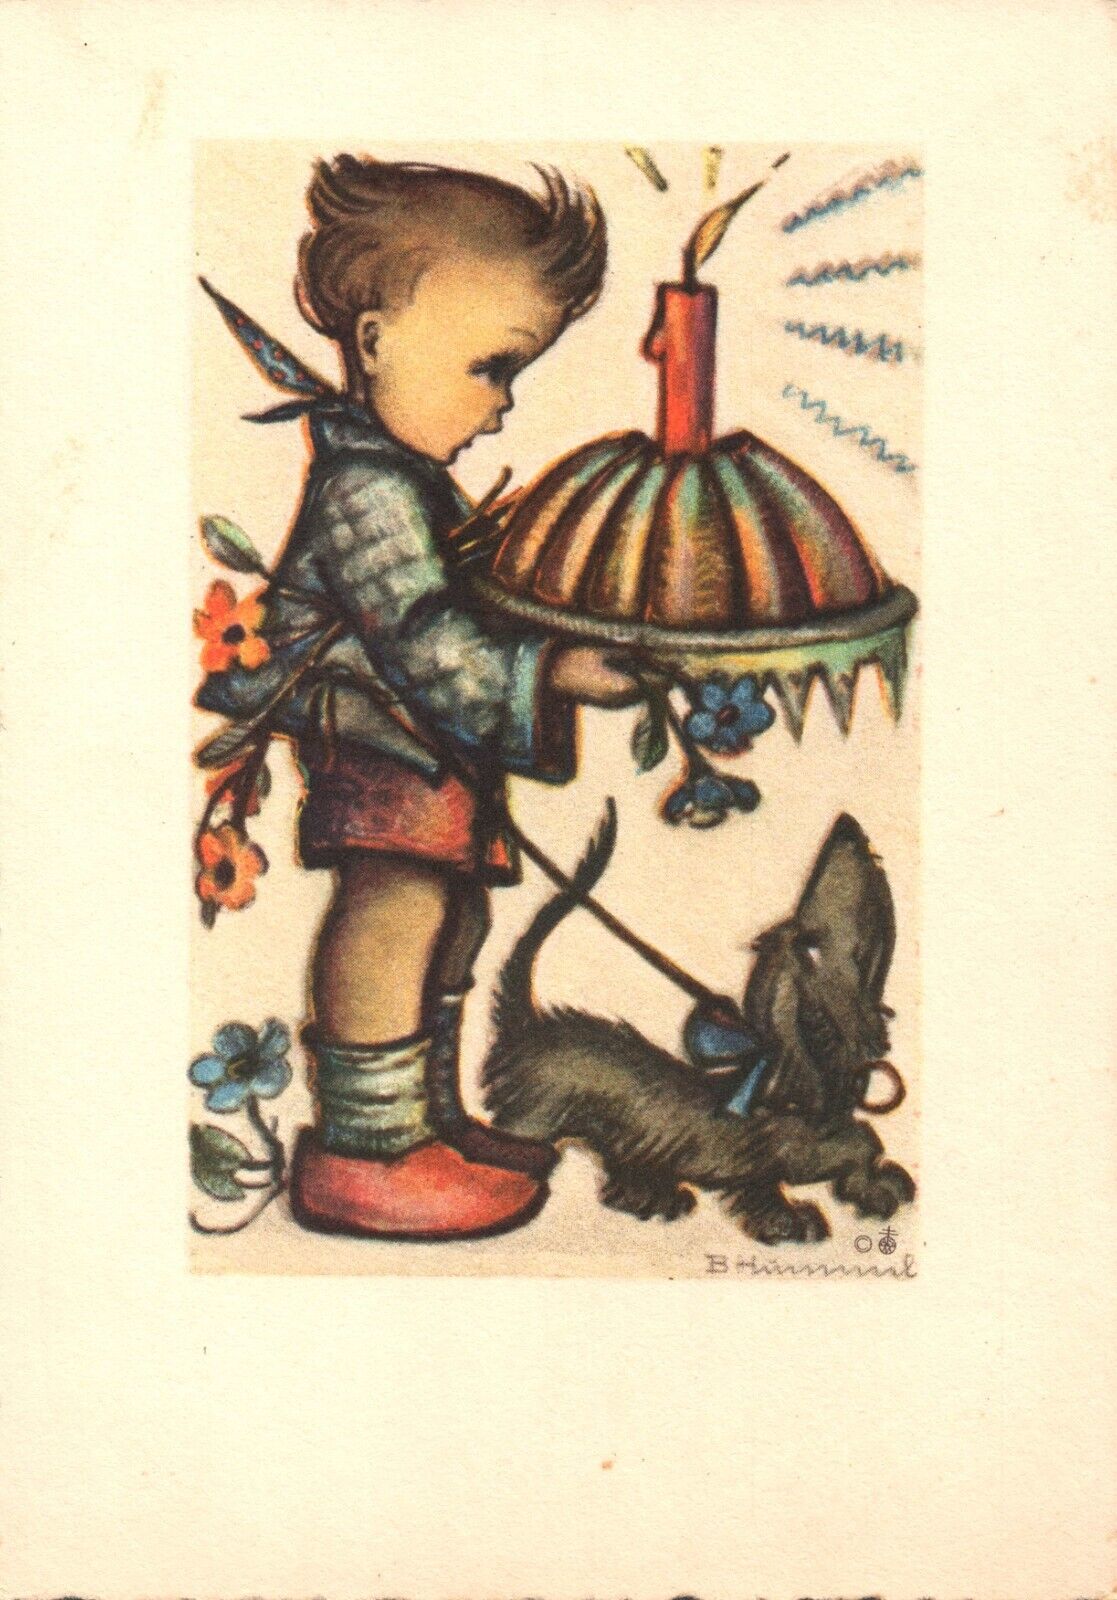 Hummel Boy Cake Candle Dog Germany Verlag Joseph Mueller Munich Postcard